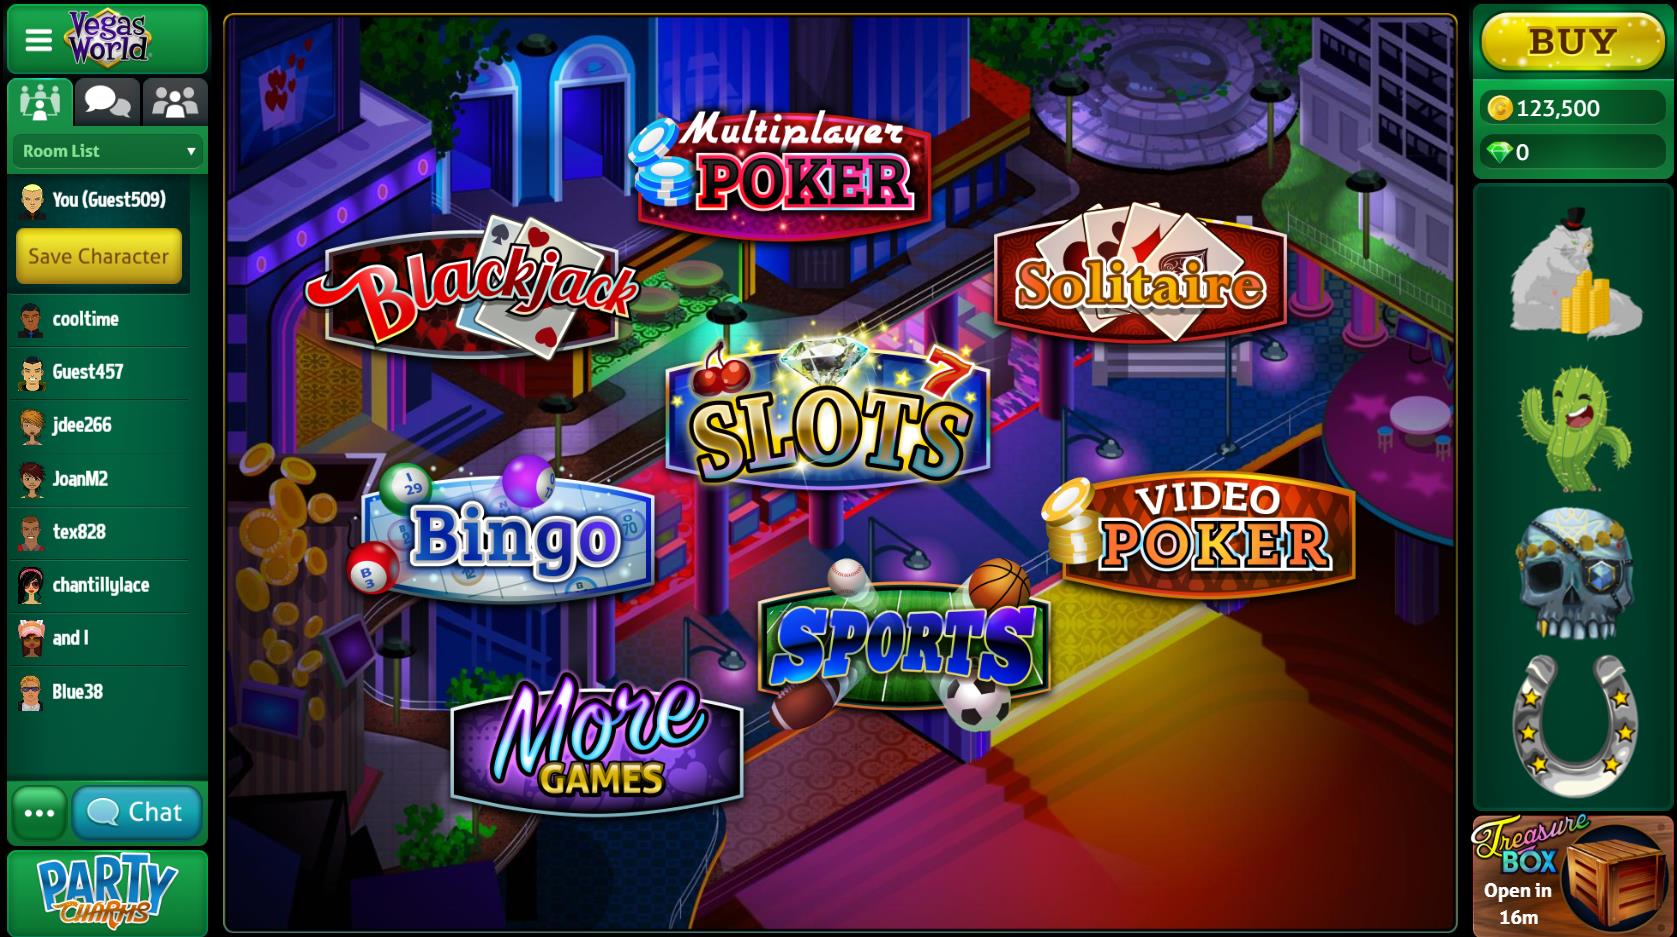 Vegas World Casino Canada \ud83e\udd47 Vegas World Online Casino 2020